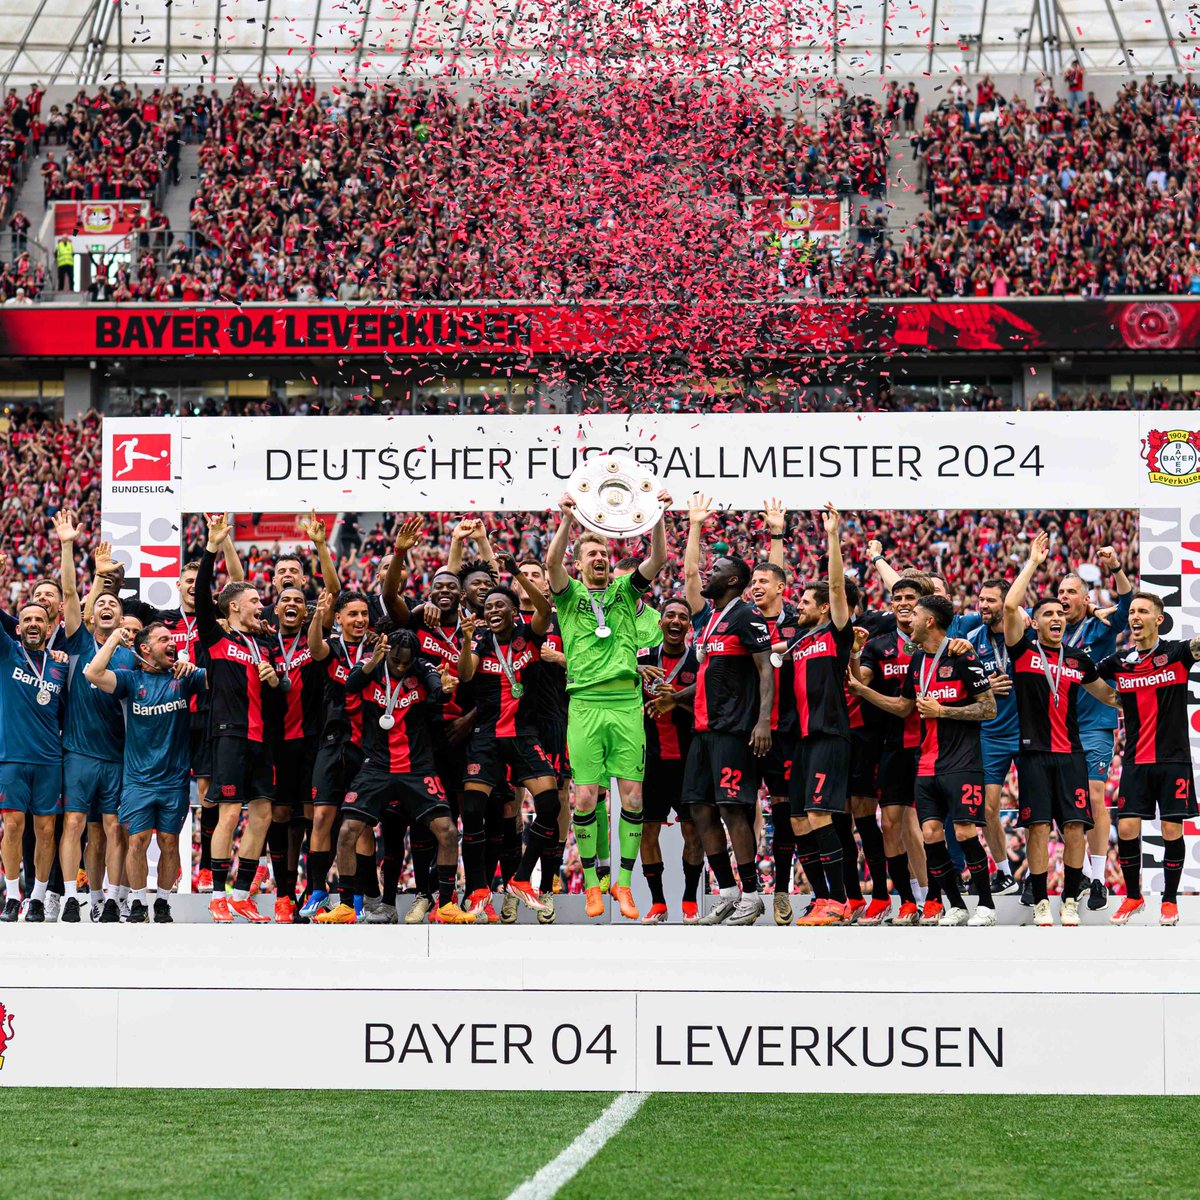 Don't worry - you'll be seeing plenty more trophy pics 😉 #DeutscherMeisterSVB #Winnerkusen